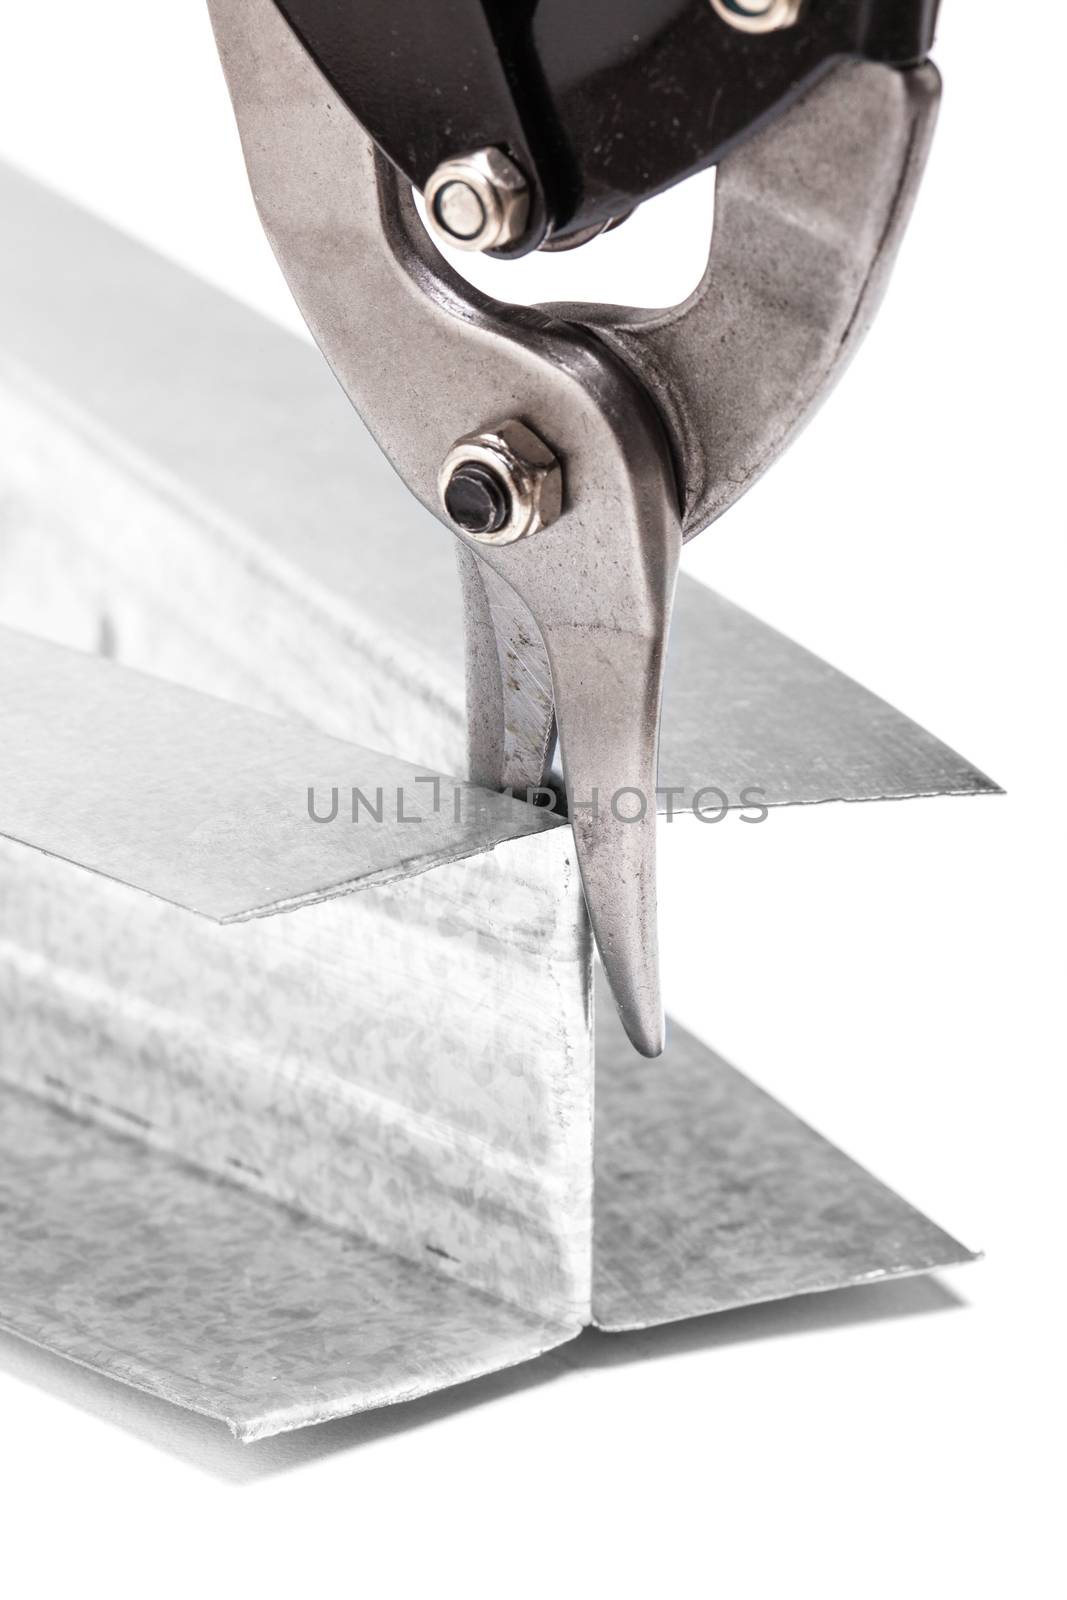 scissors and u shaped metal profile by kokimk